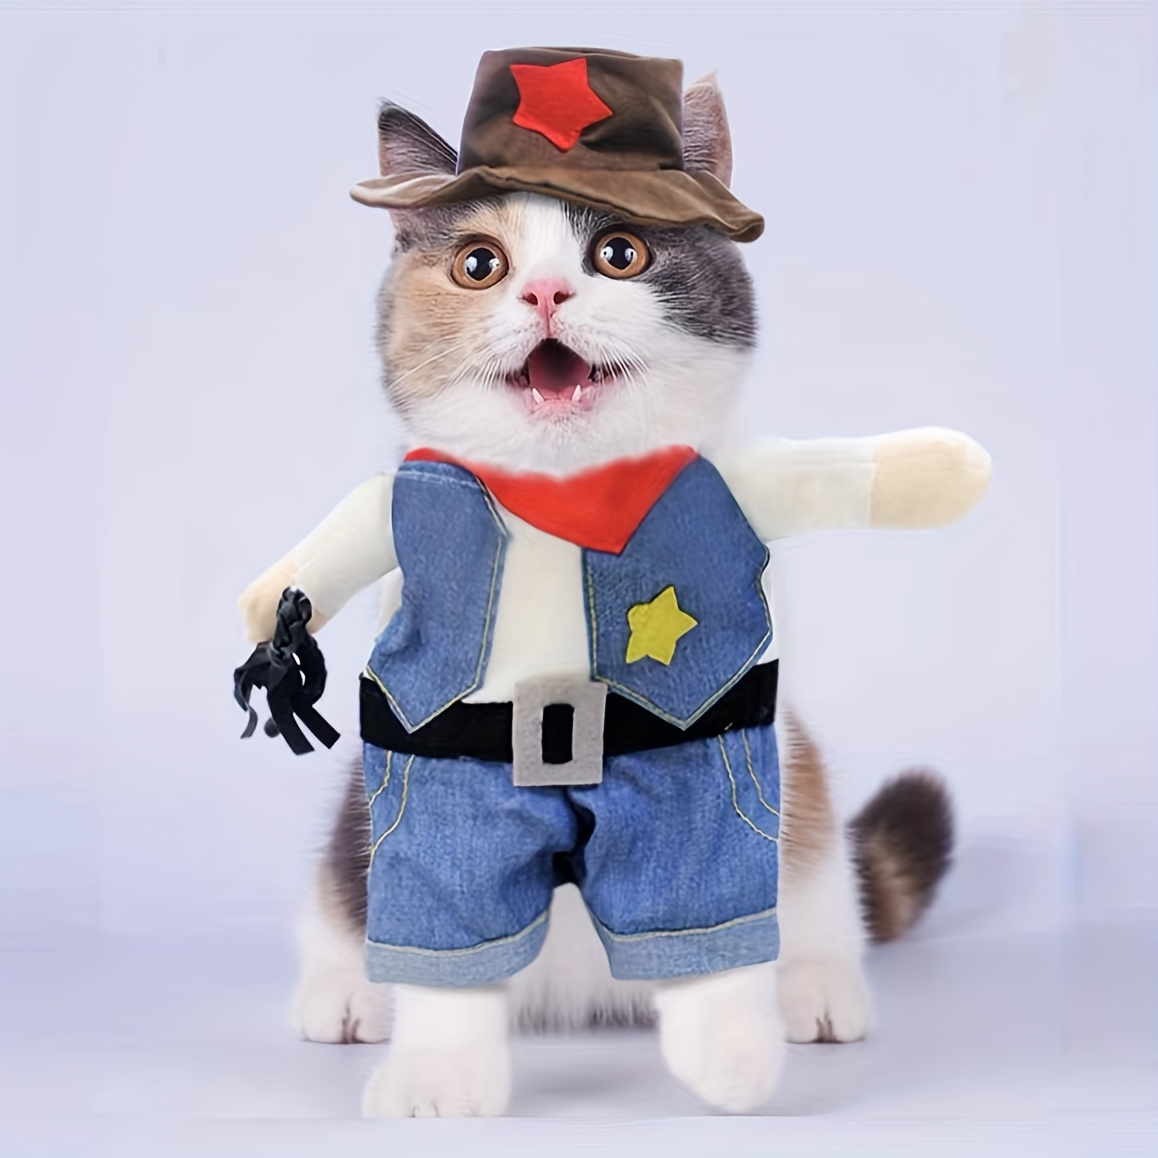 Magic Cat Clothes Universal Pet Cat Clothing for Small Cats Kitty Mascotas  Pet